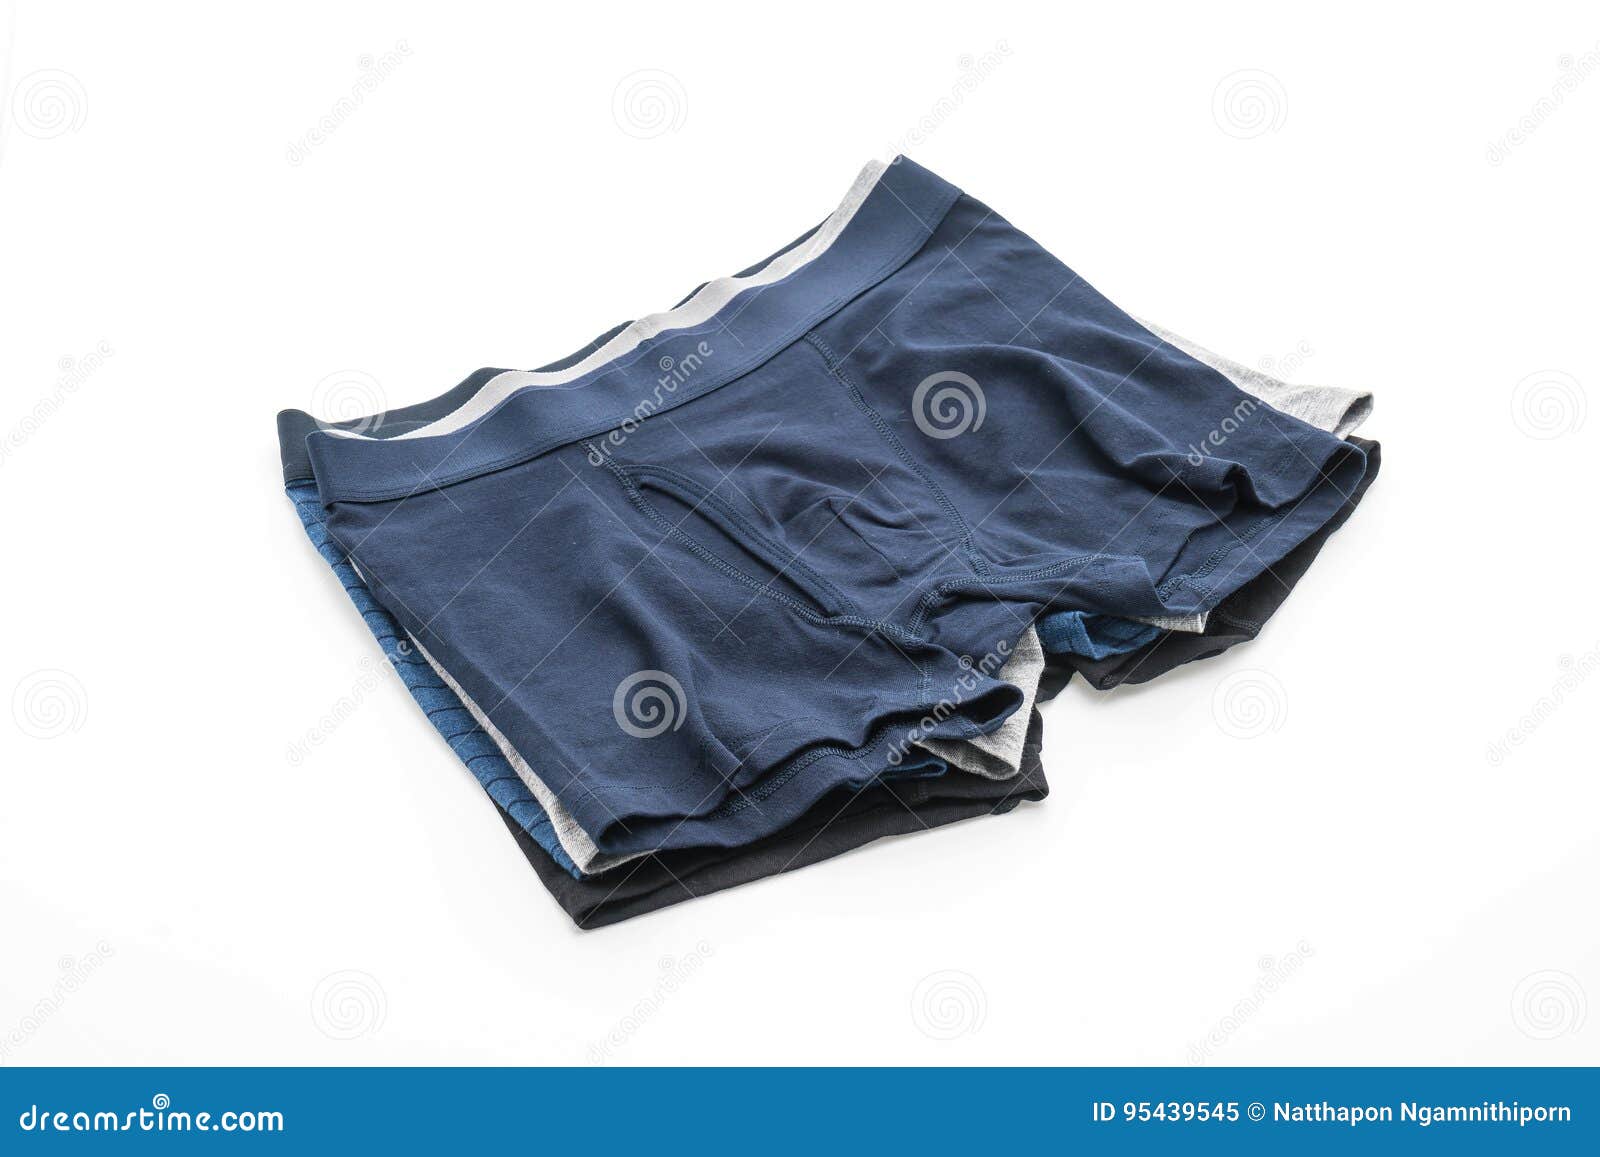 Men Underwear on White Background Stock Image - Image of textile ...